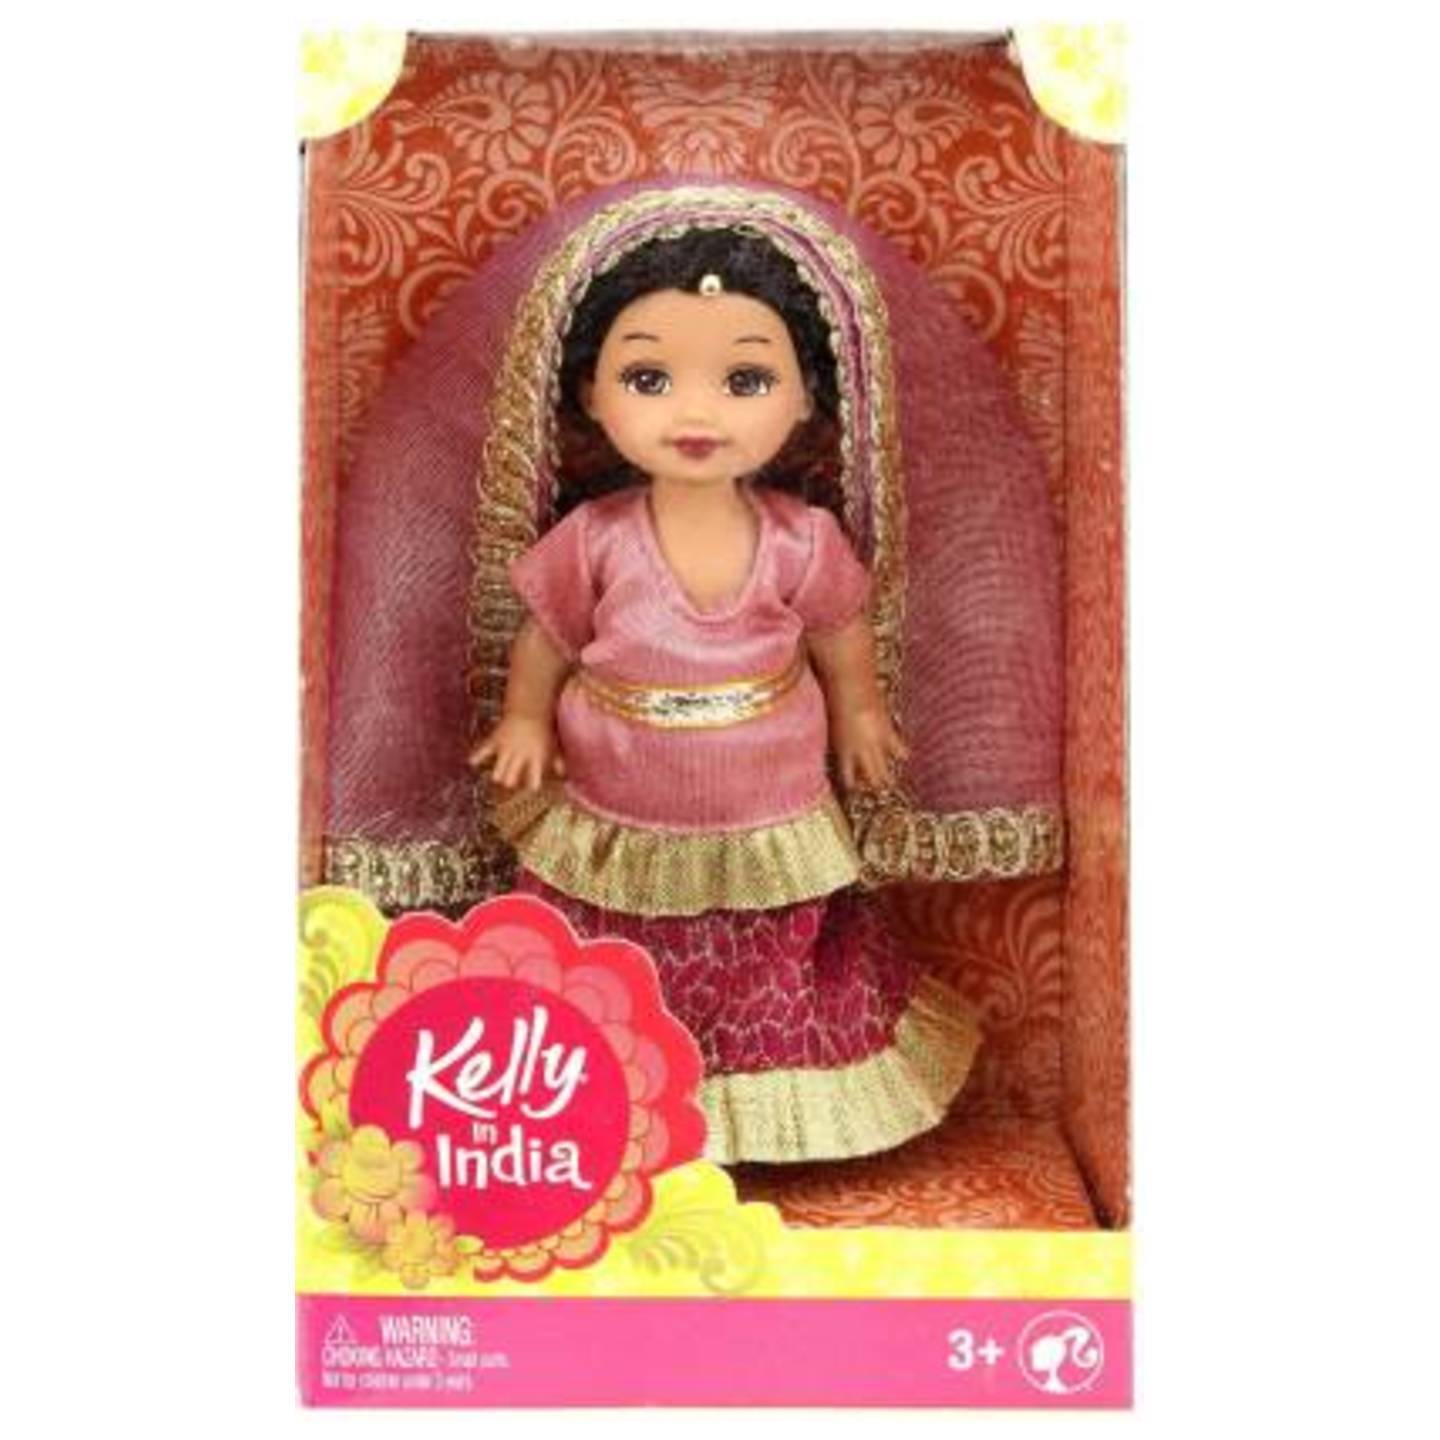 Barbie Kelly in India